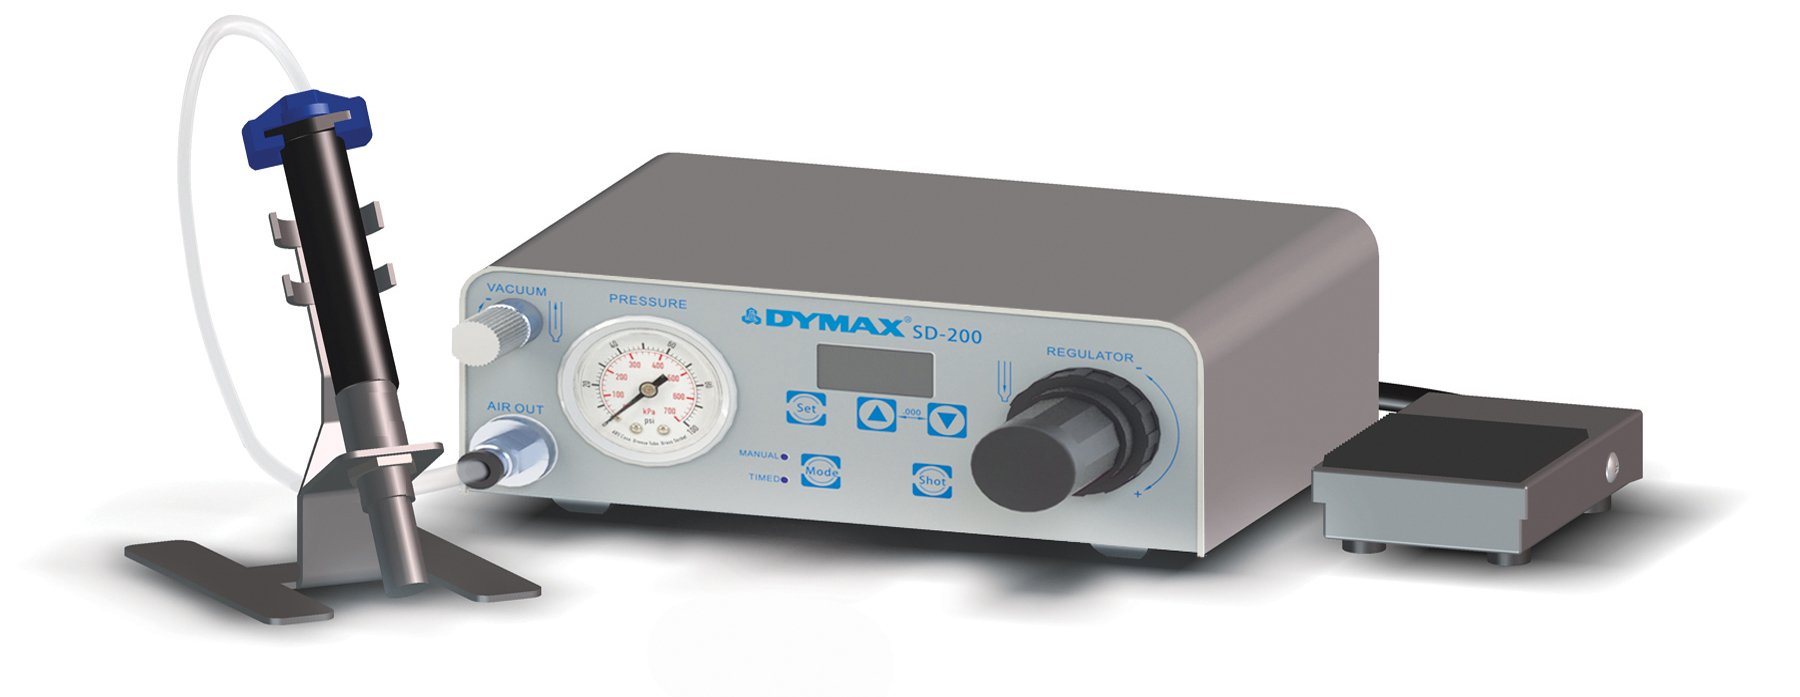 Dymax SD-200 Spritzenausgabegerät